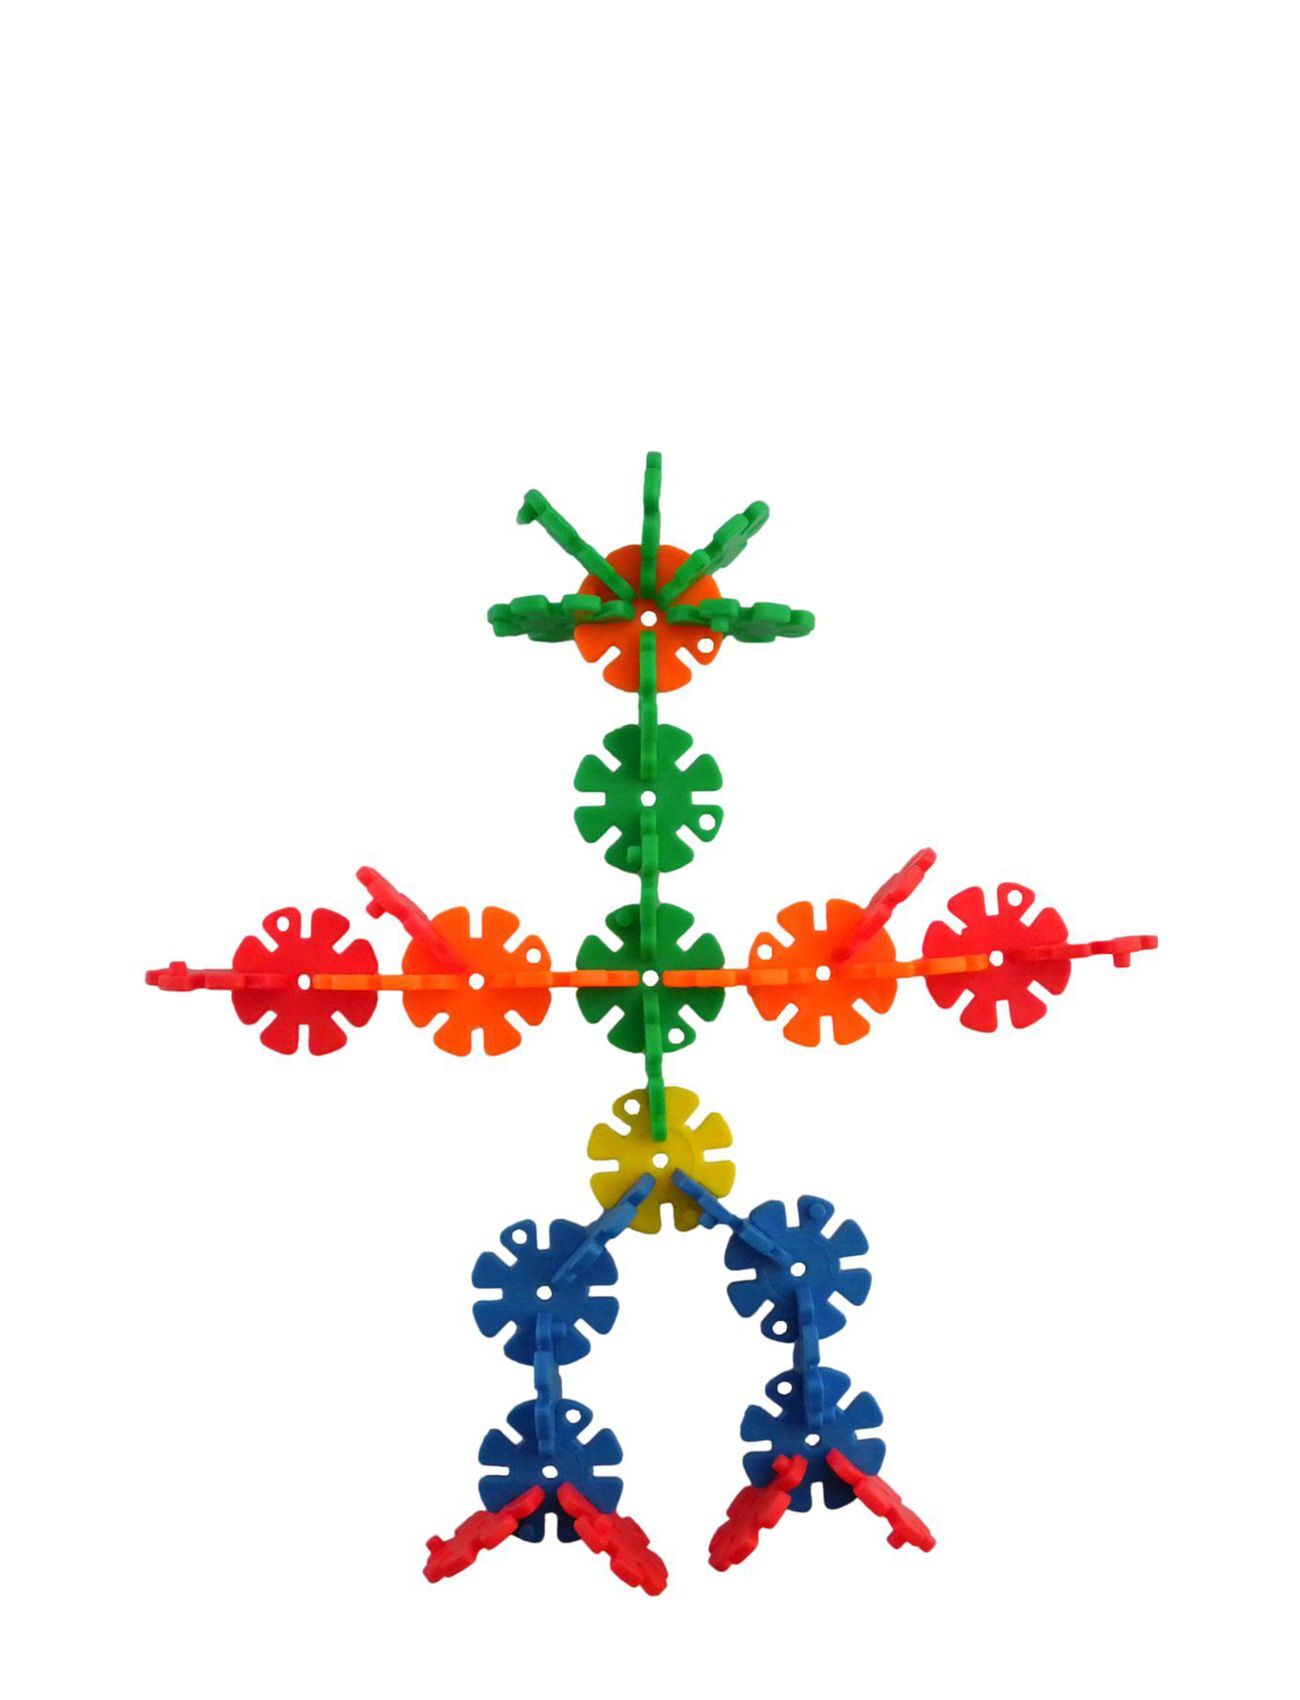 Magni Toys Snowflake Puzzle Toys Building Sets & Blocks Building Sets Multi/mønstret Magni Toys